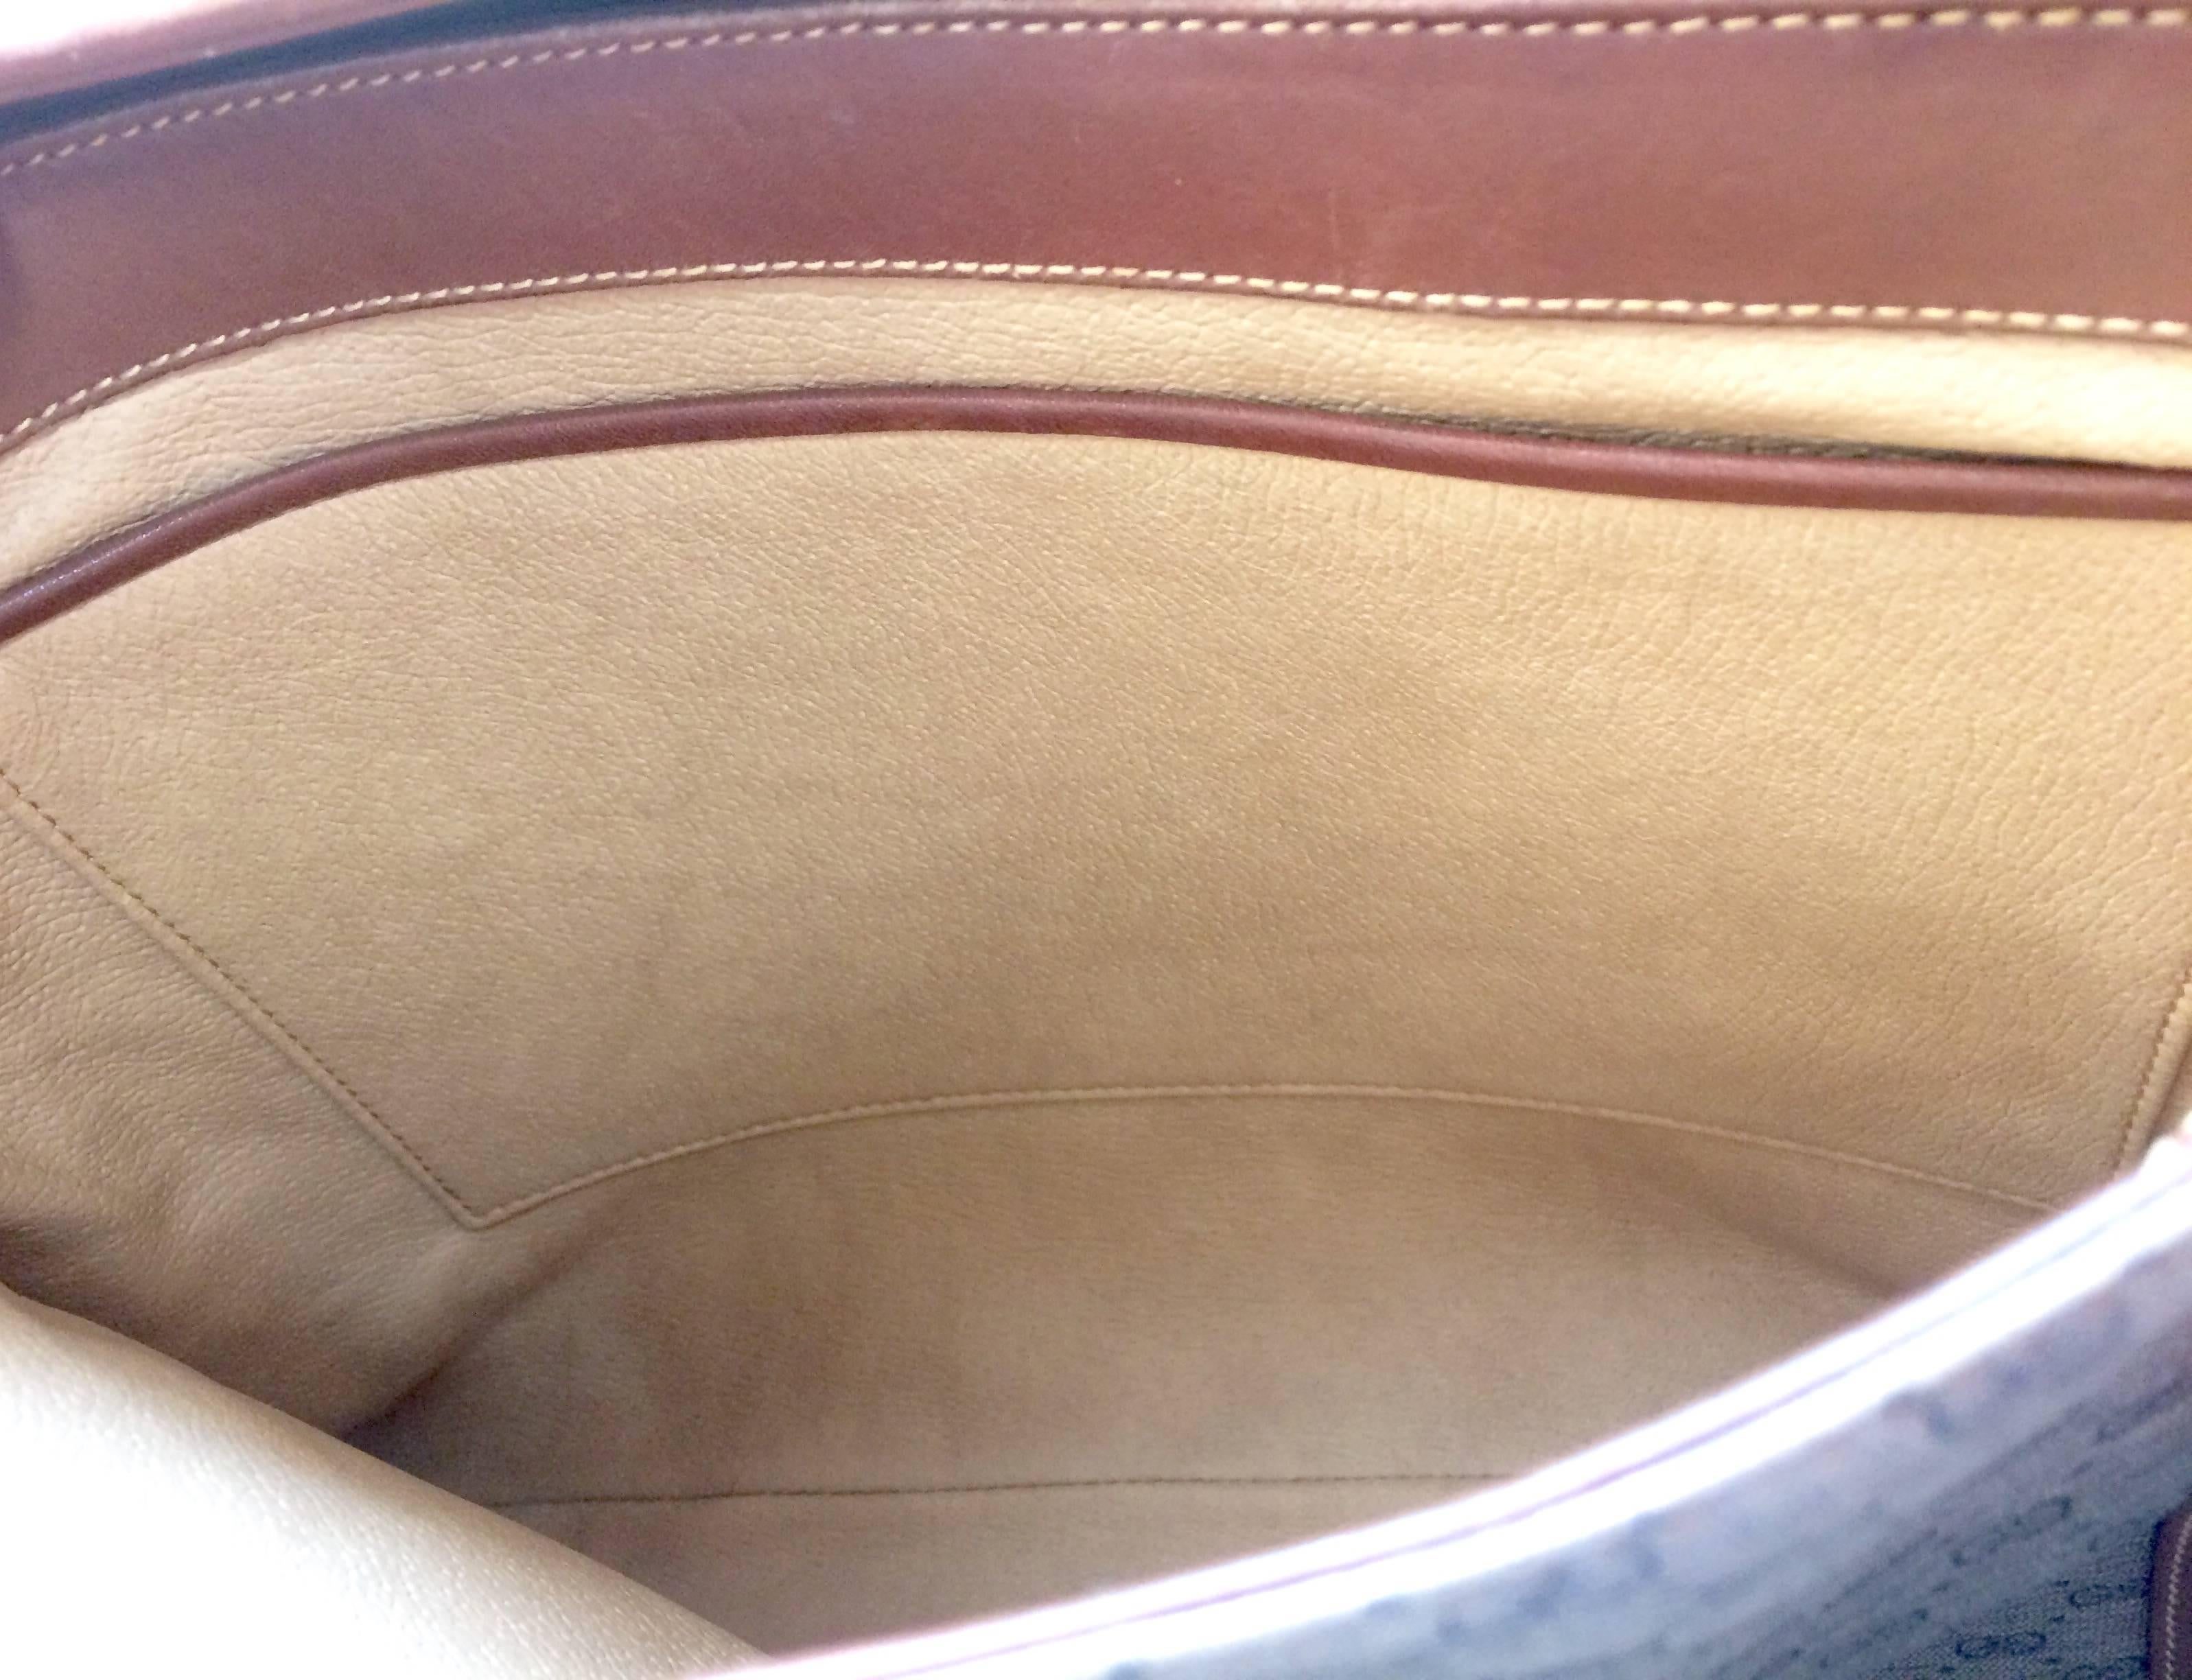 Vintage Gucci beige micro GG monogram print shoulder bag with brown leather 1